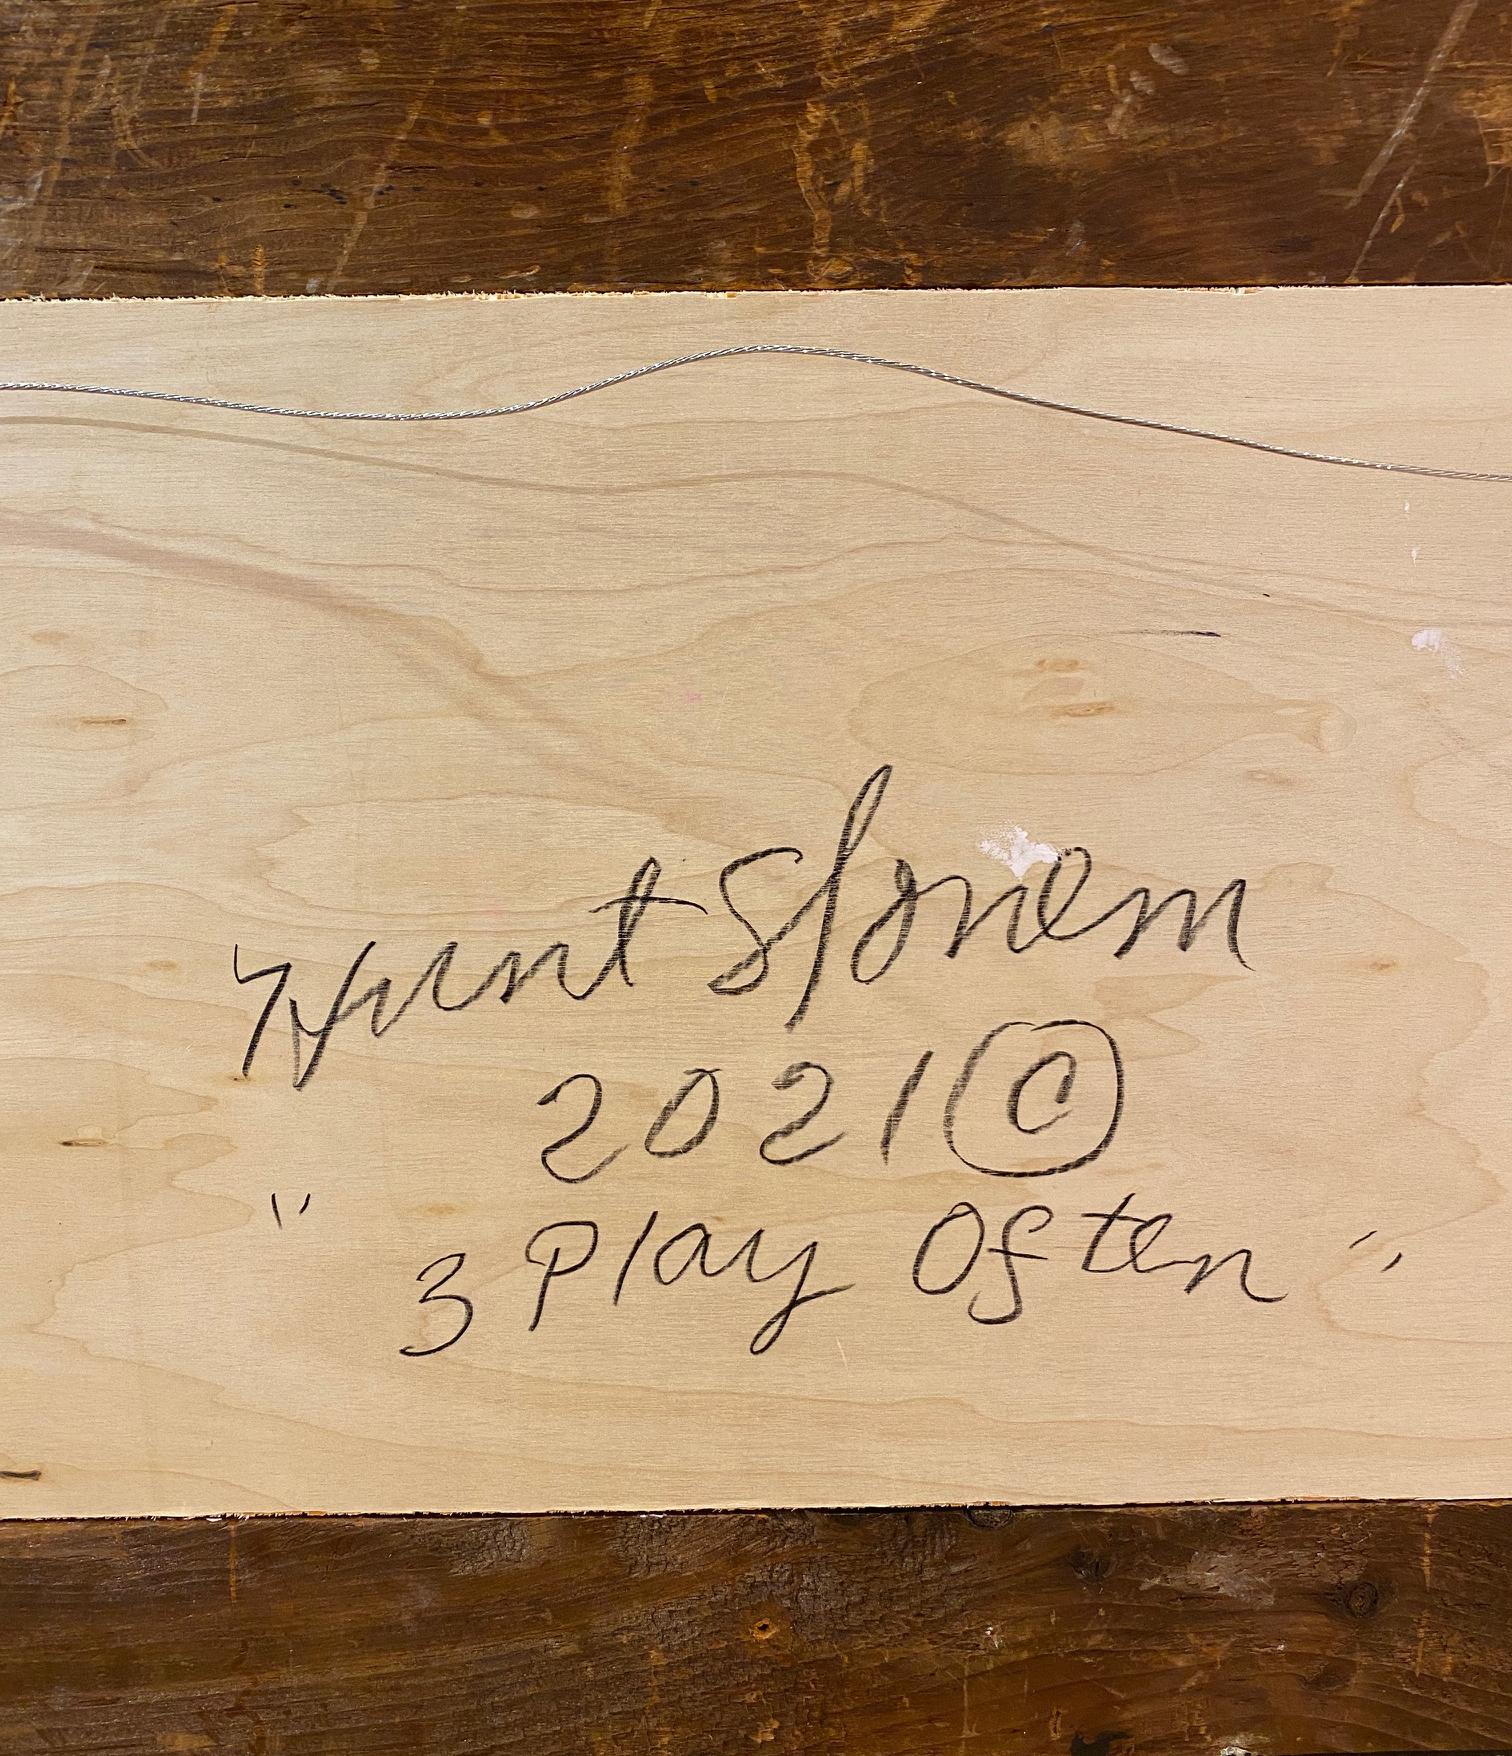 Artist:  Slonem, Hunt
Title:  Three Play Often
Series:  Bunnies
Date:  2021
Medium:  Oil on wood
Unframed Dimensions:  9.5